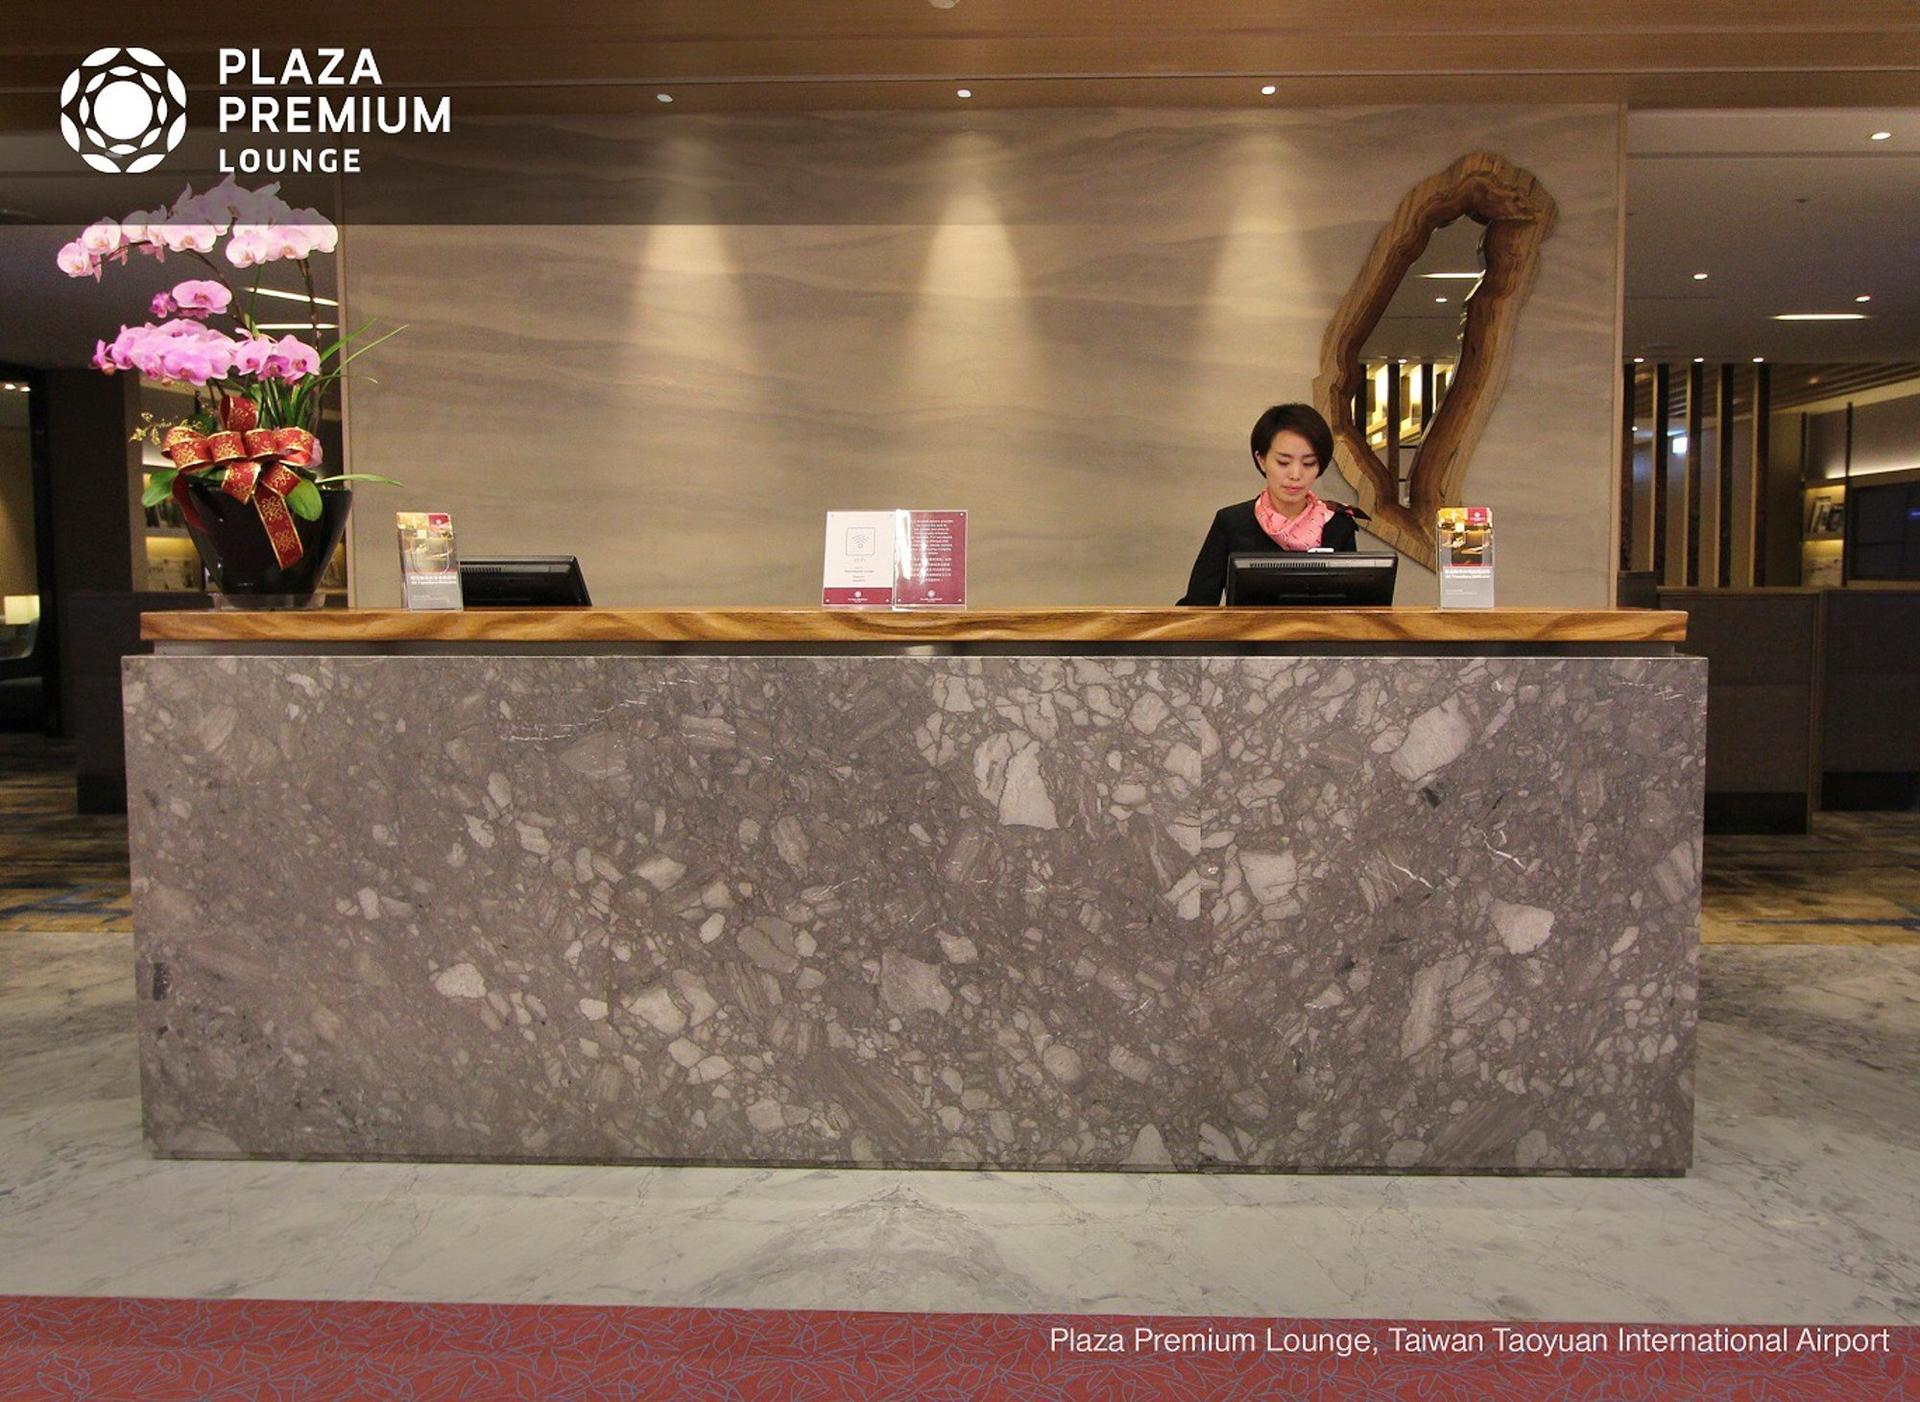 Plaza Premium Lounge (Zone A) image 8 of 99